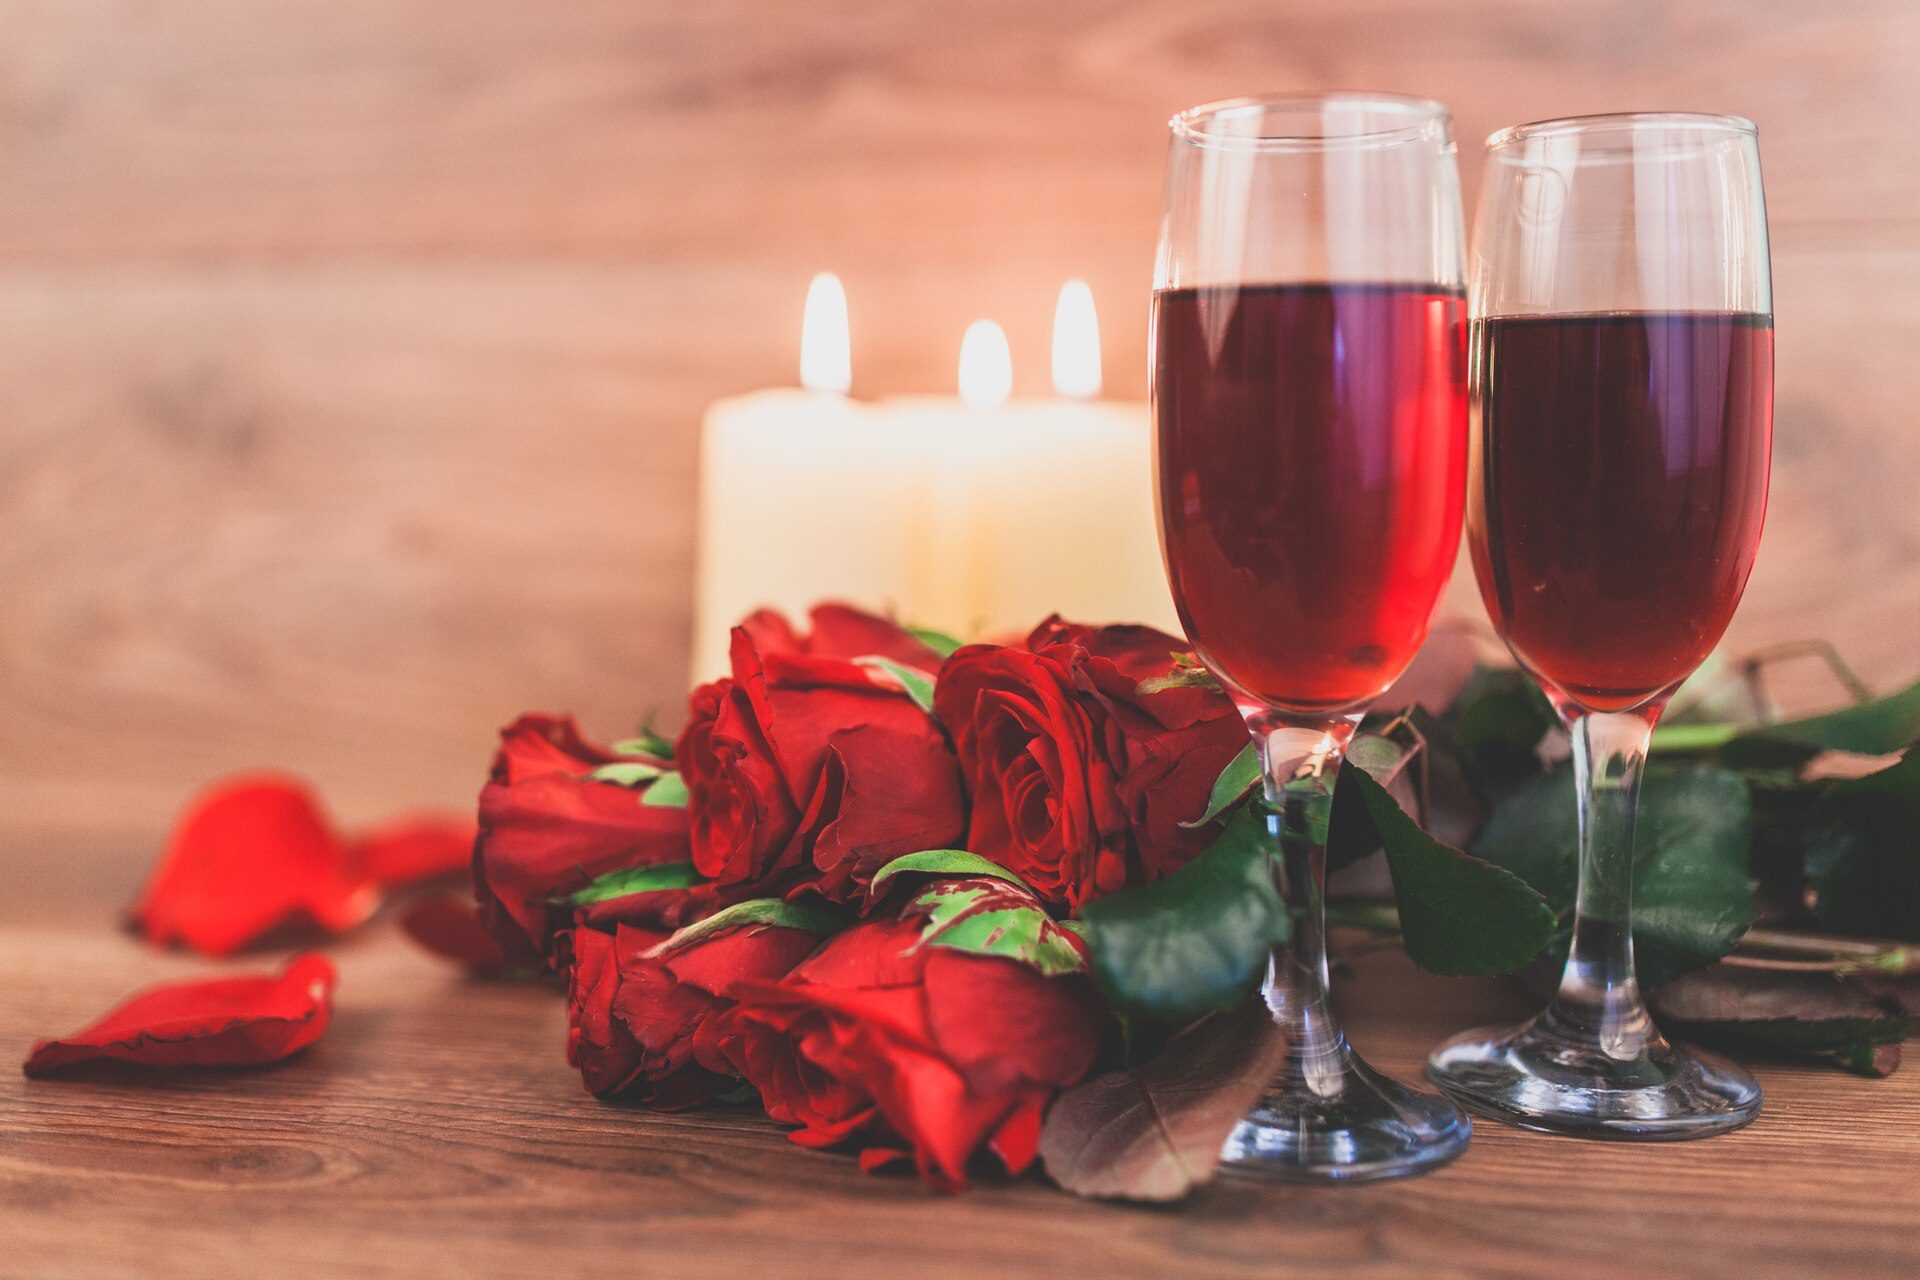 Romantic Candles